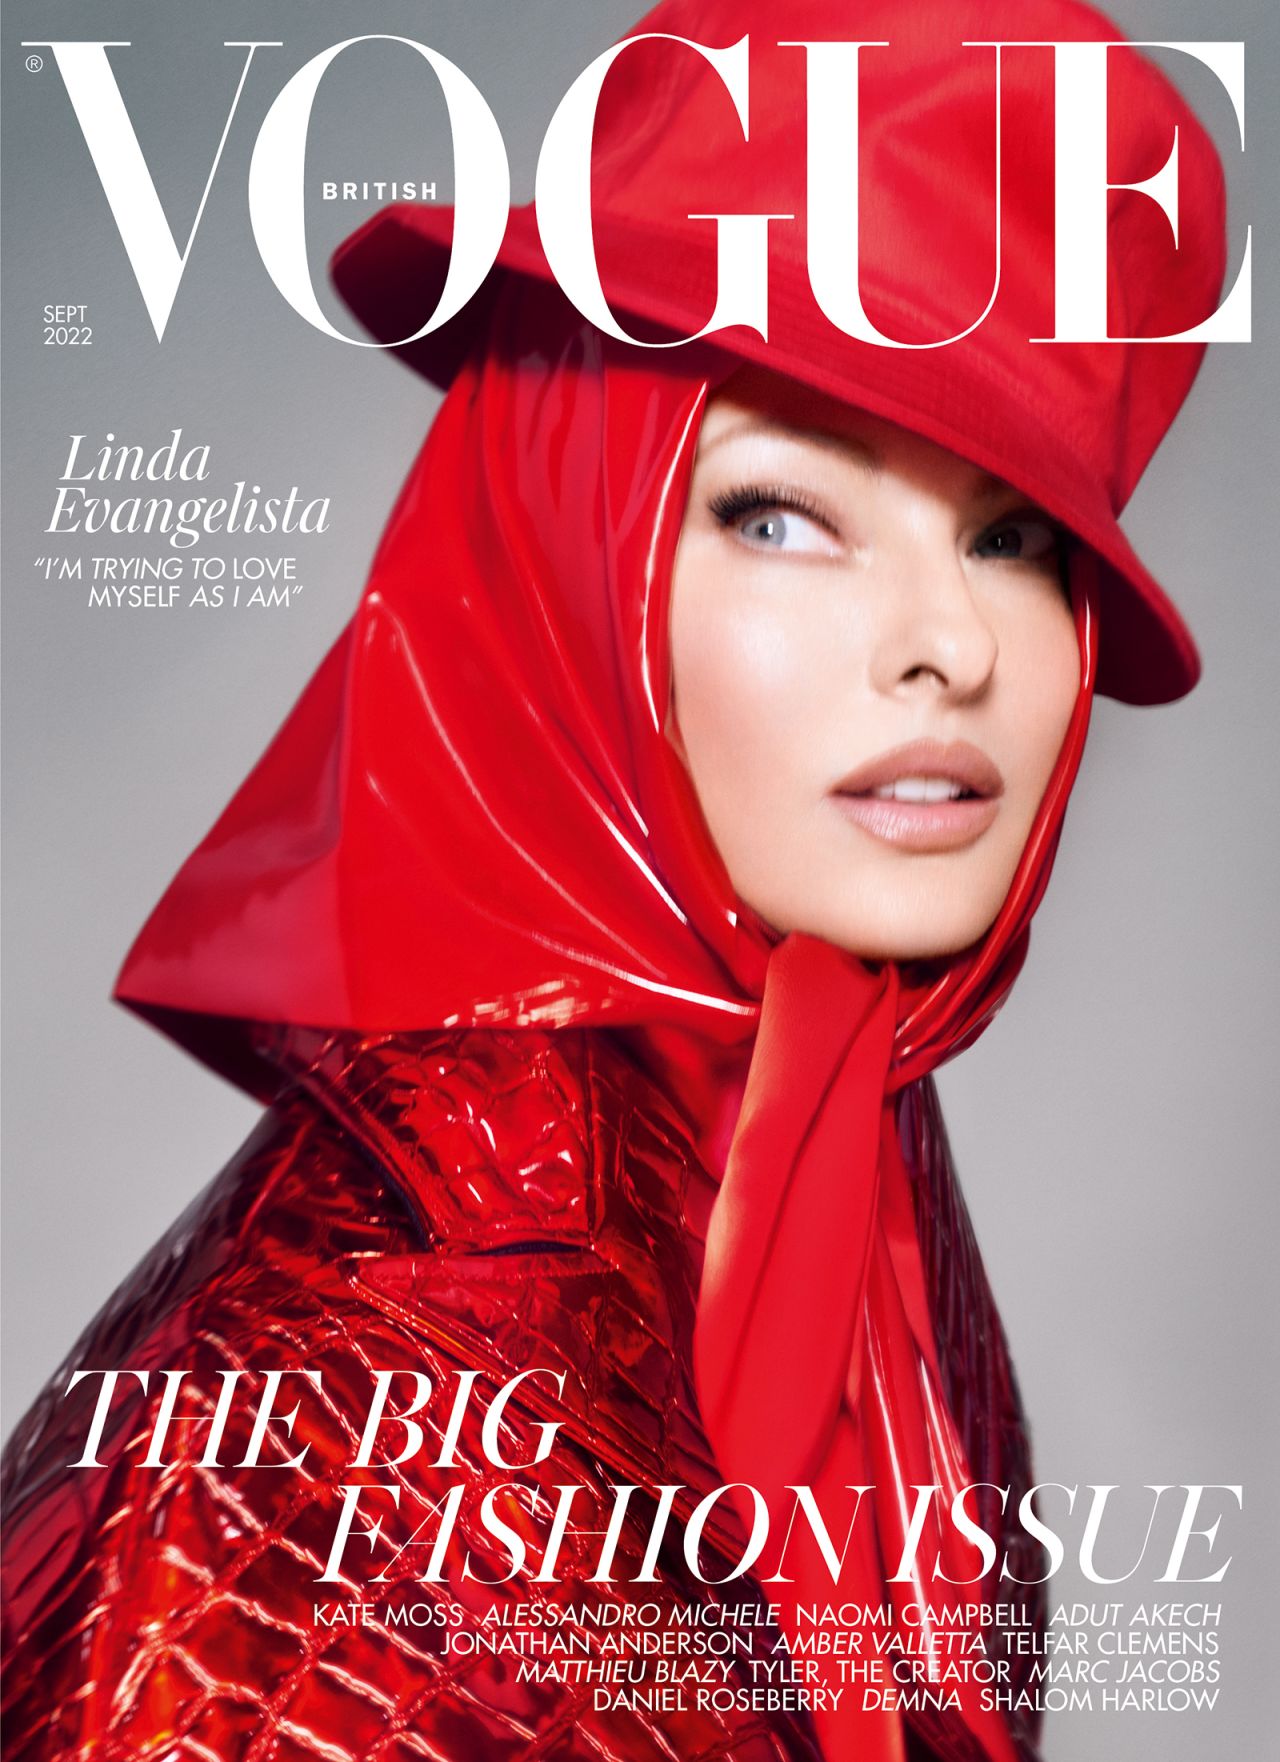 Linda Evangelista fronts the cover of Vogue